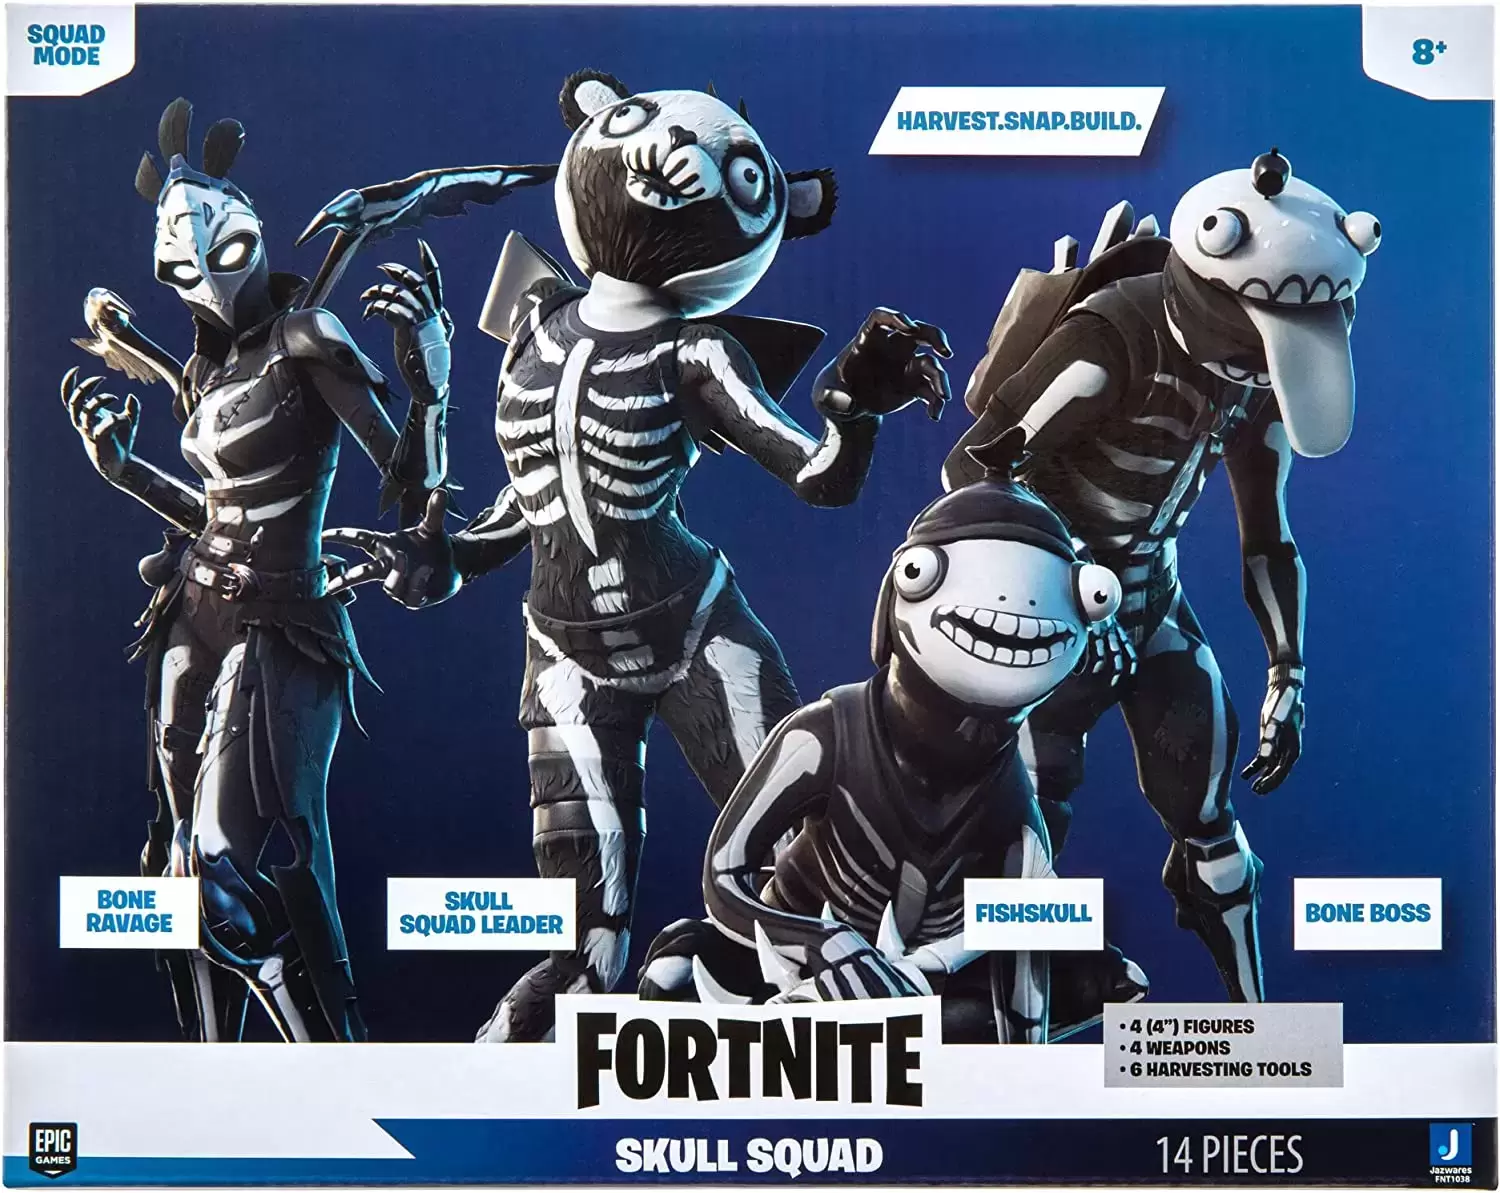 Fortnite JazWares - Skull Squad (Bone Ravage / Skull Squad Leader / Fishskull / Bone Boss) - Squad Mode